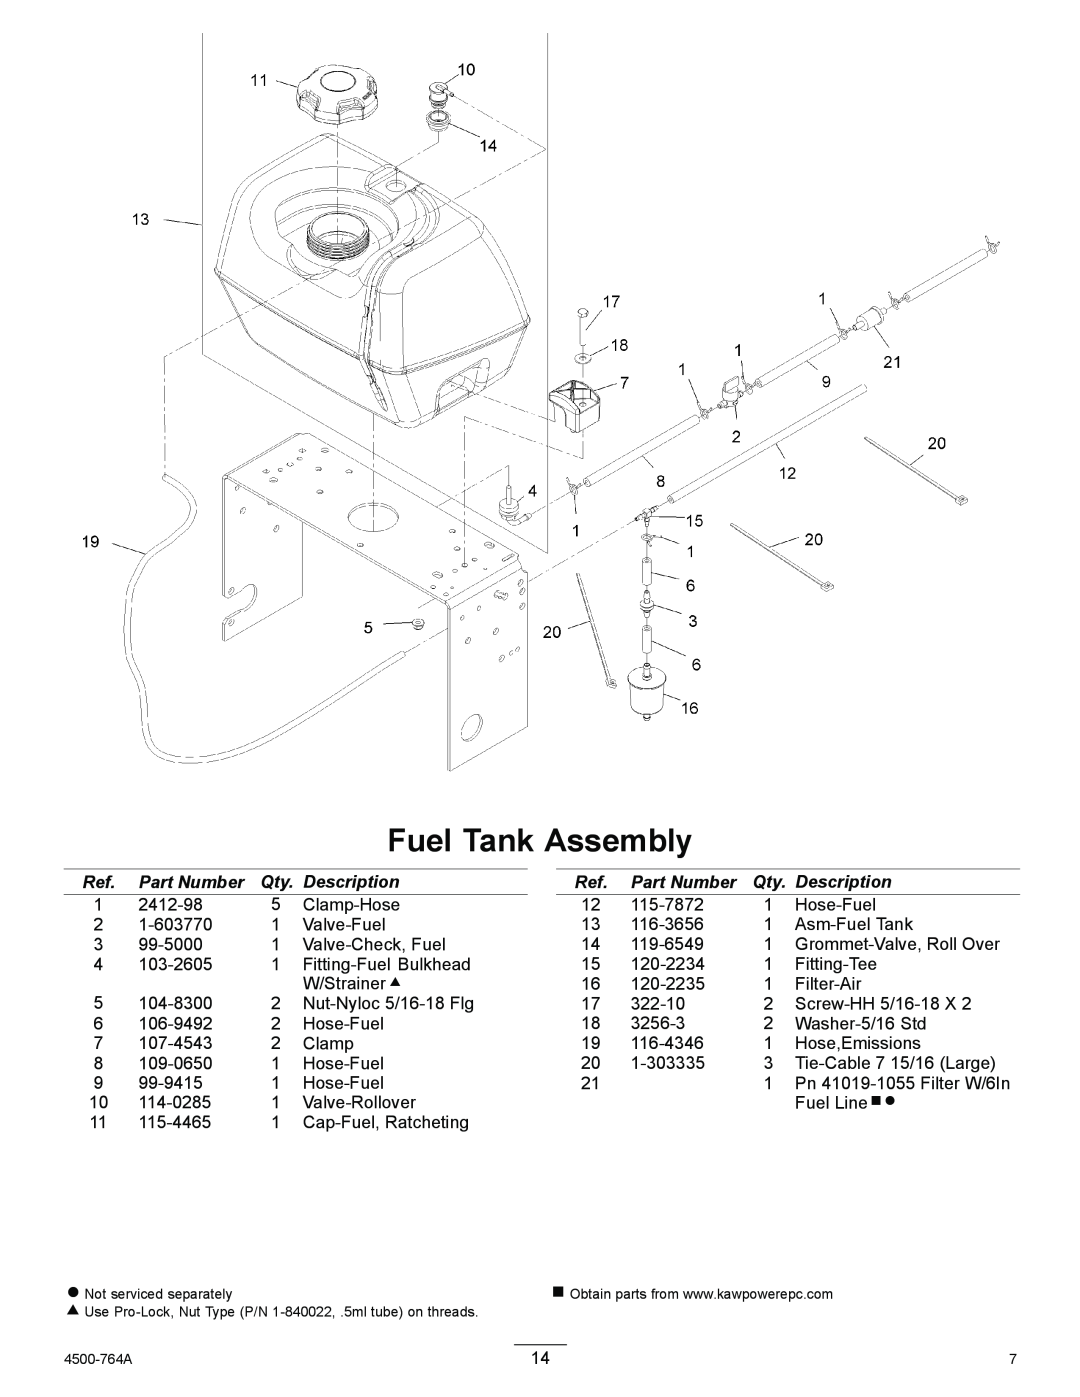 Exmark 4500-764 Rev.A, MG16KA362 manual Fuel Tank Assembly, Part Number, Description 